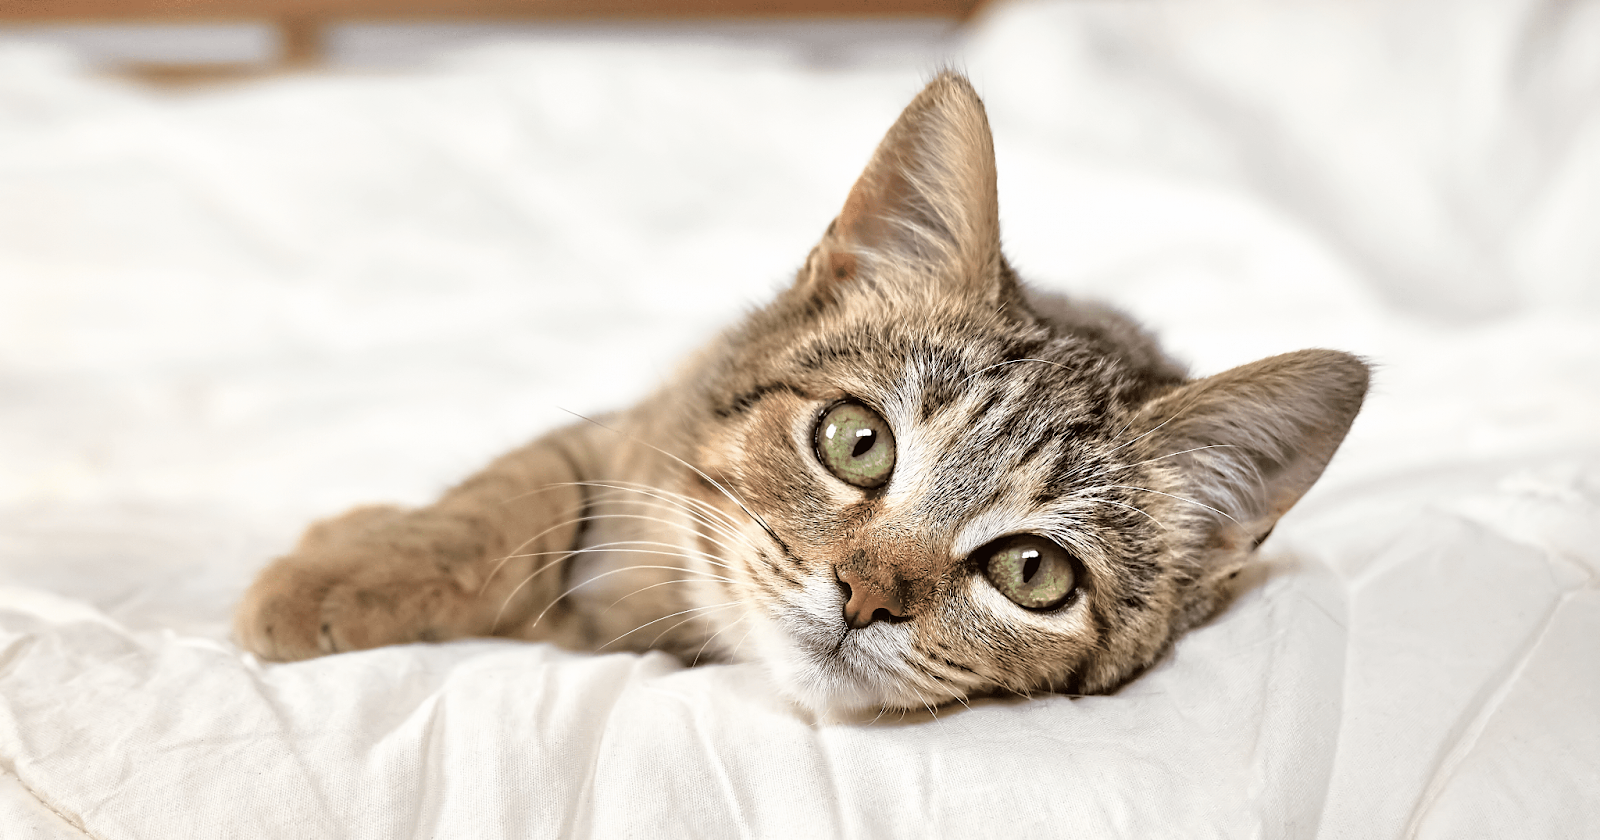 cute tabby kitten on white bed sheet